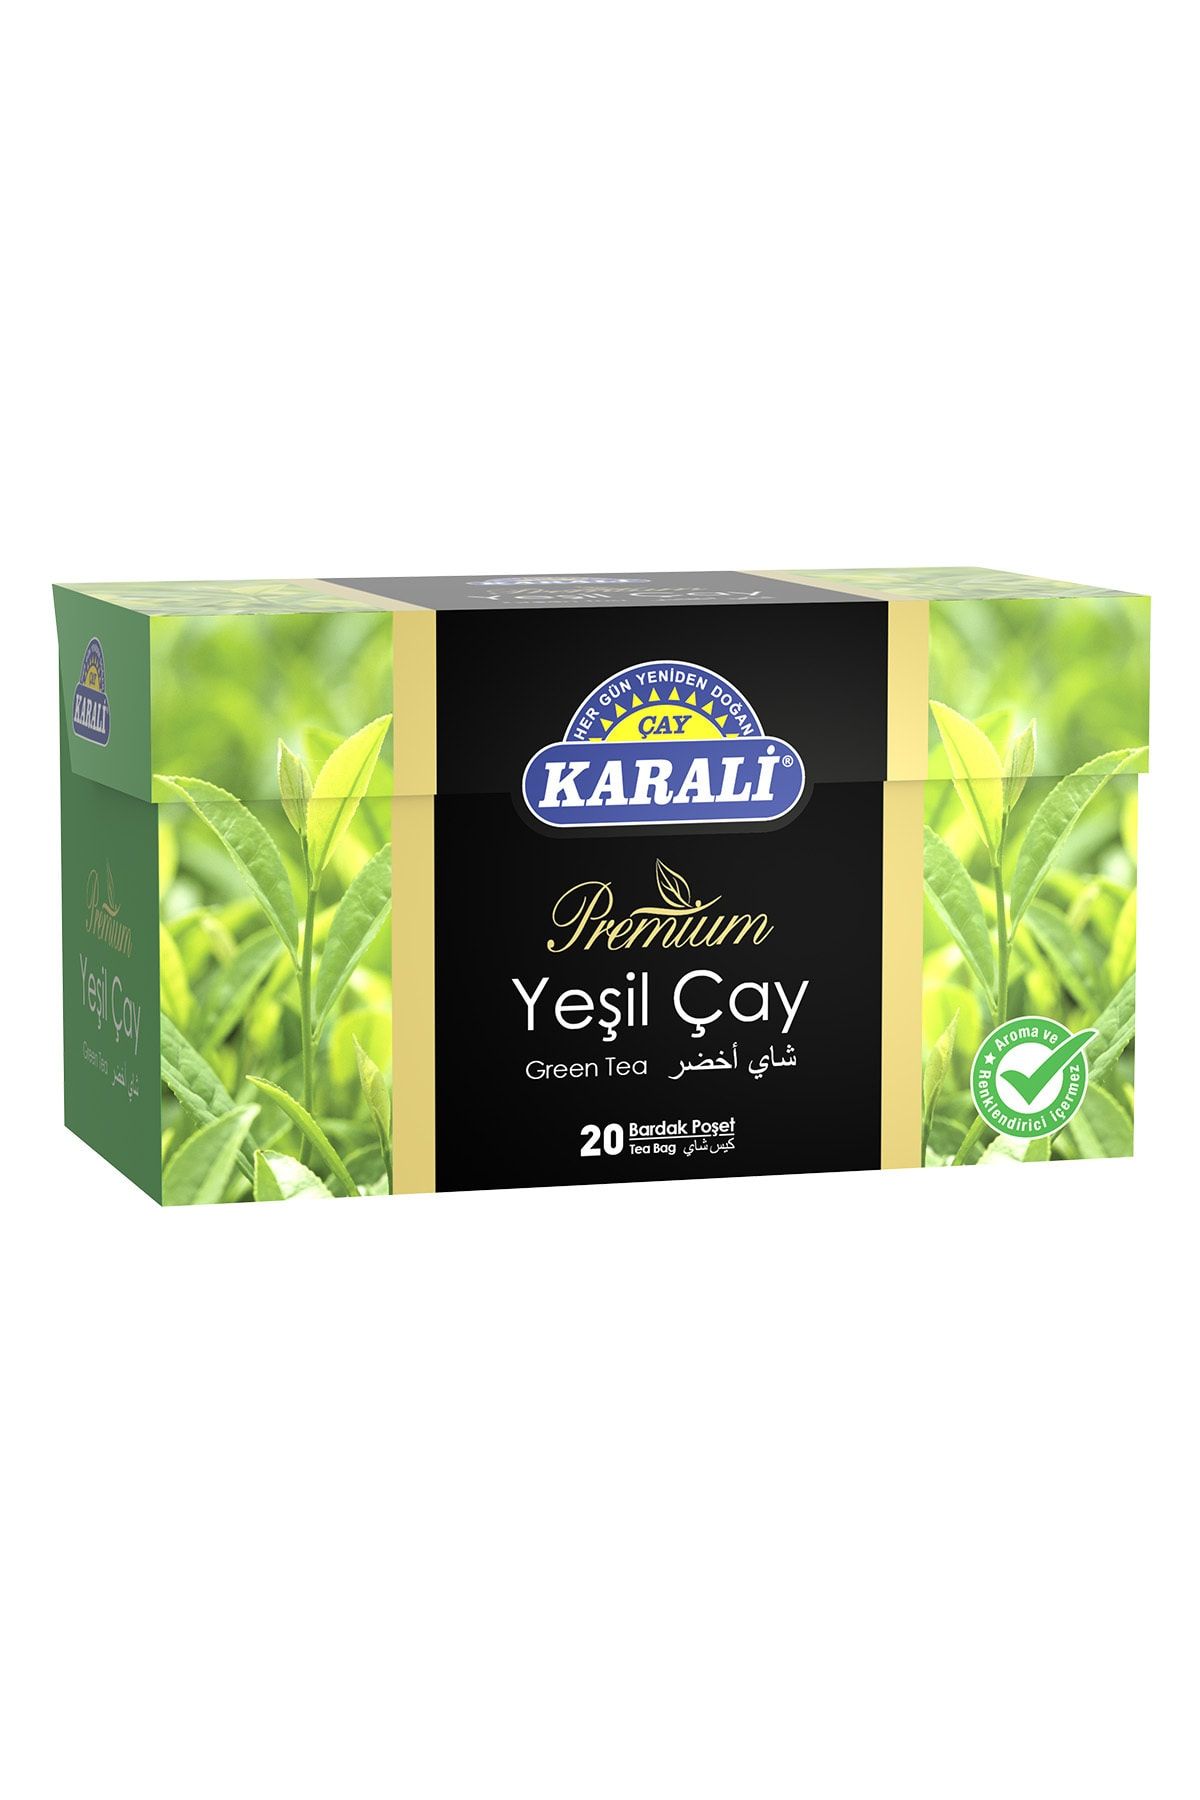 Karali Çay Premium Bardak Poşet Yeşil Çay 20'li